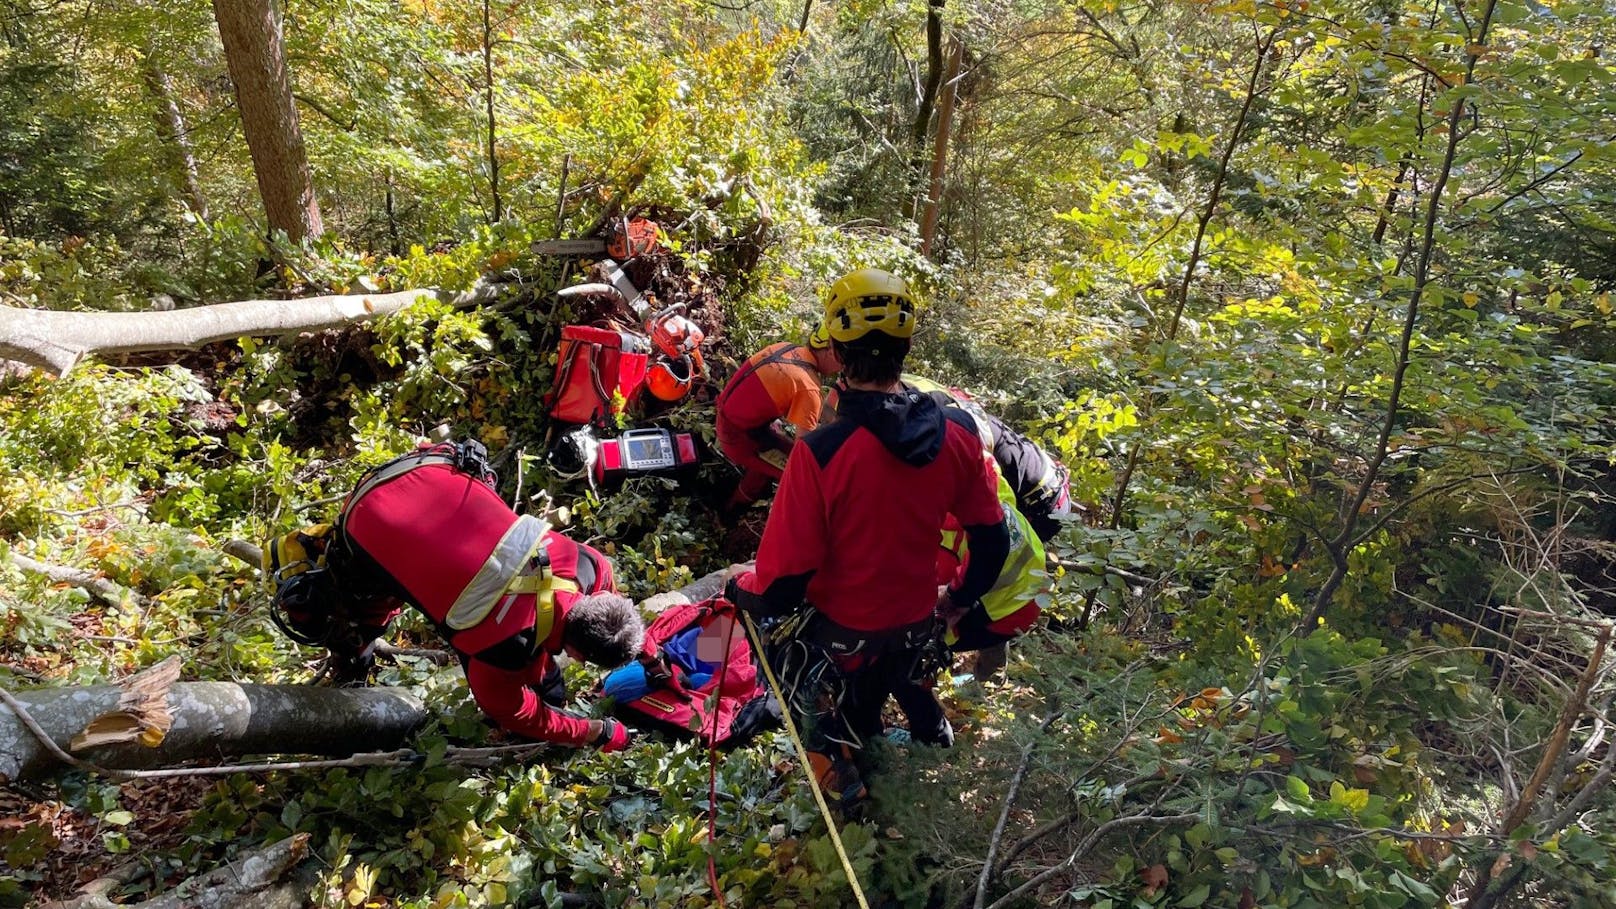 Tiroler bei Forstarbeiten schwer verletzt